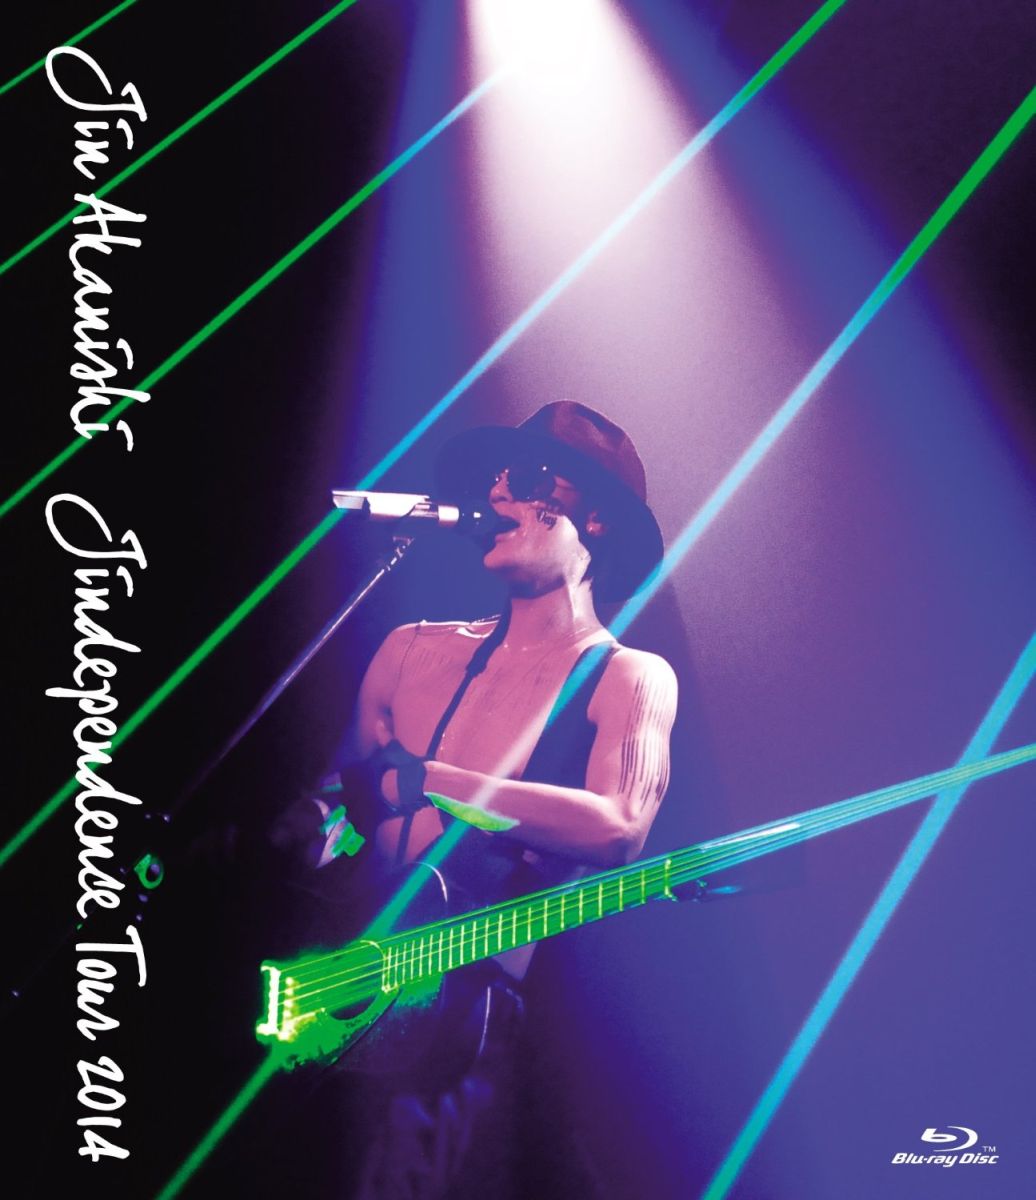 JIN AKANISHI “JINDEPENDENCE” TOUR 2014【Blu-ray】